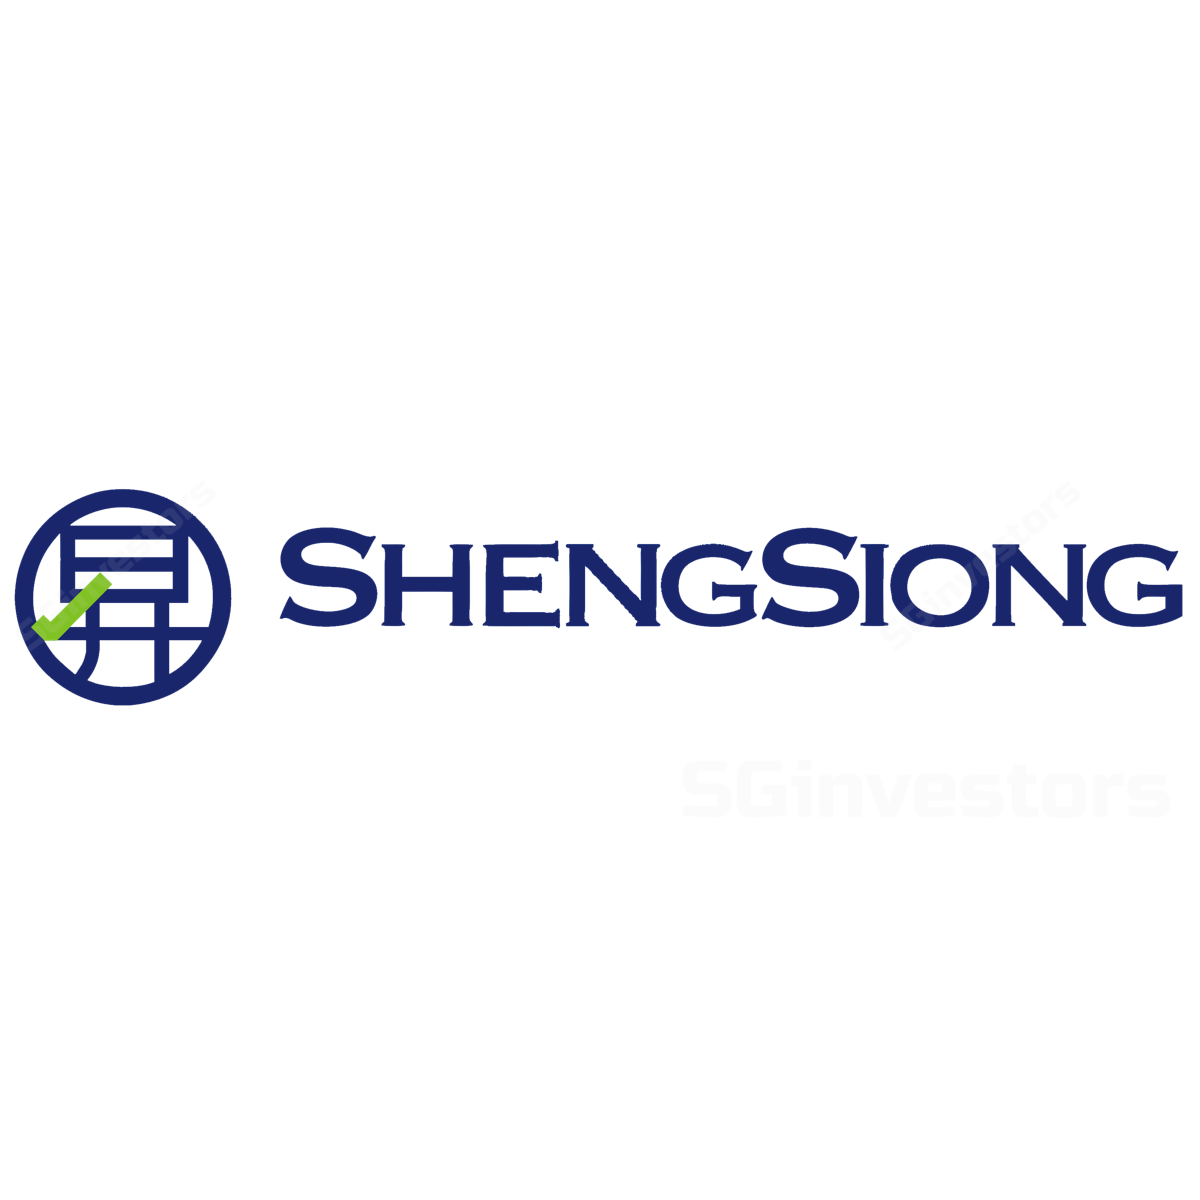 Sheng Siong Group (SSG SP) - Maybank Kim Eng 2018-04-02: At The Heartland Of The Matter